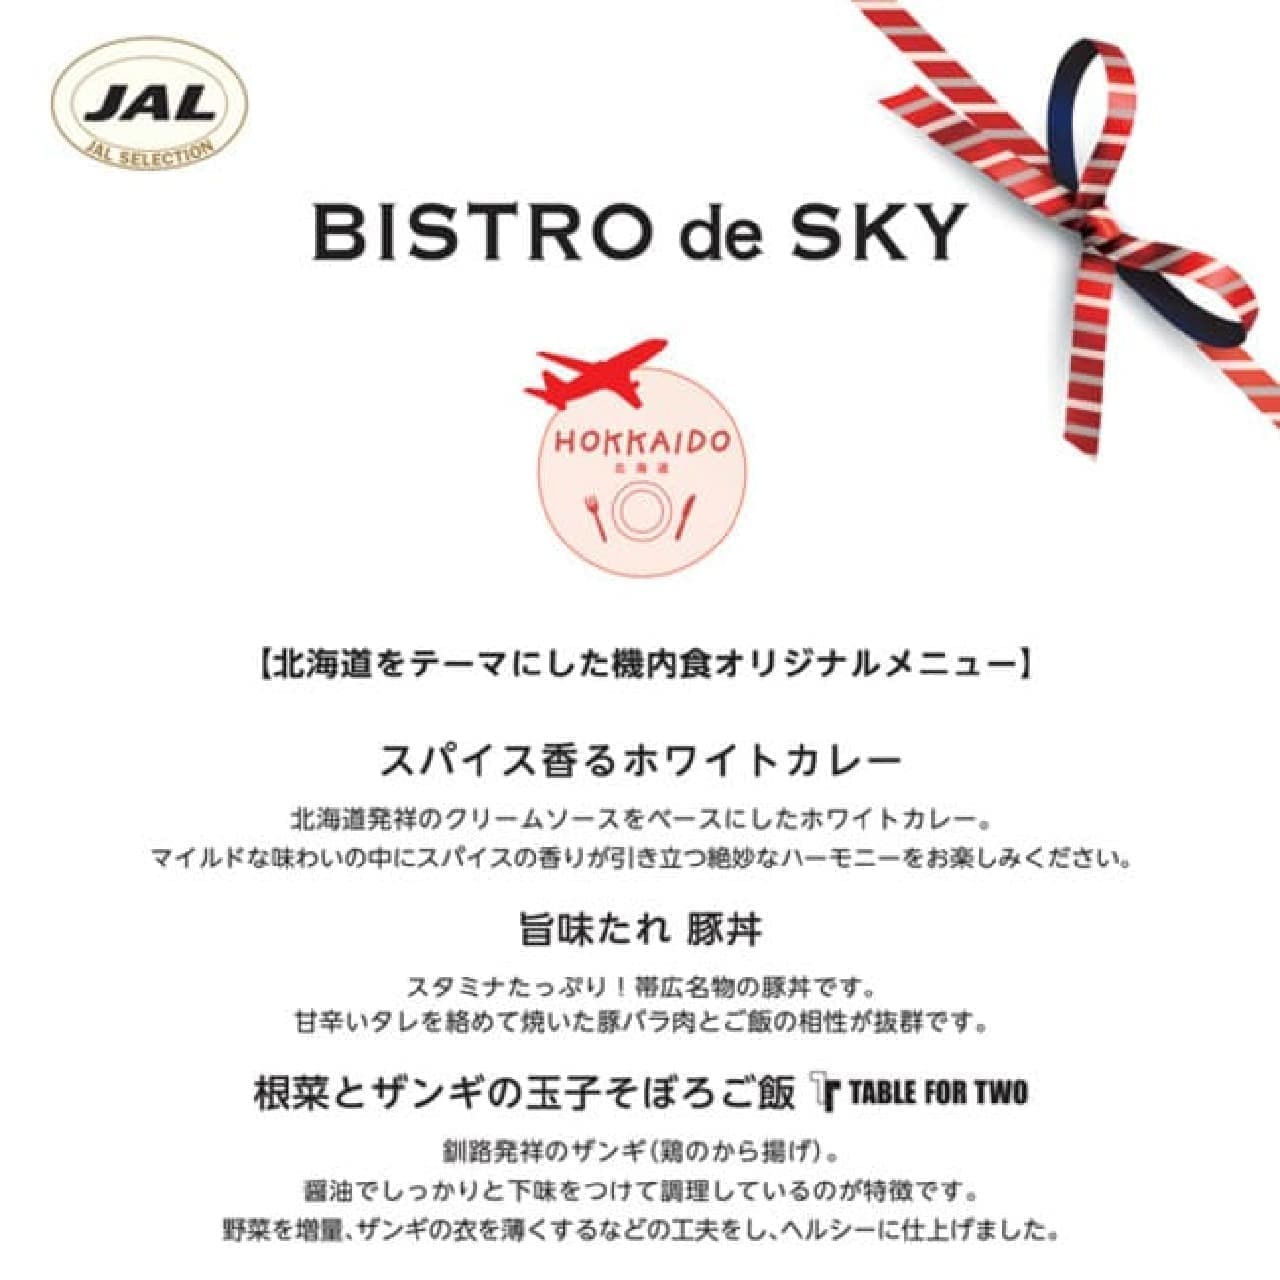 JAL in-flight meal "BISTRO de SKY" to be sold at AEON Net Super